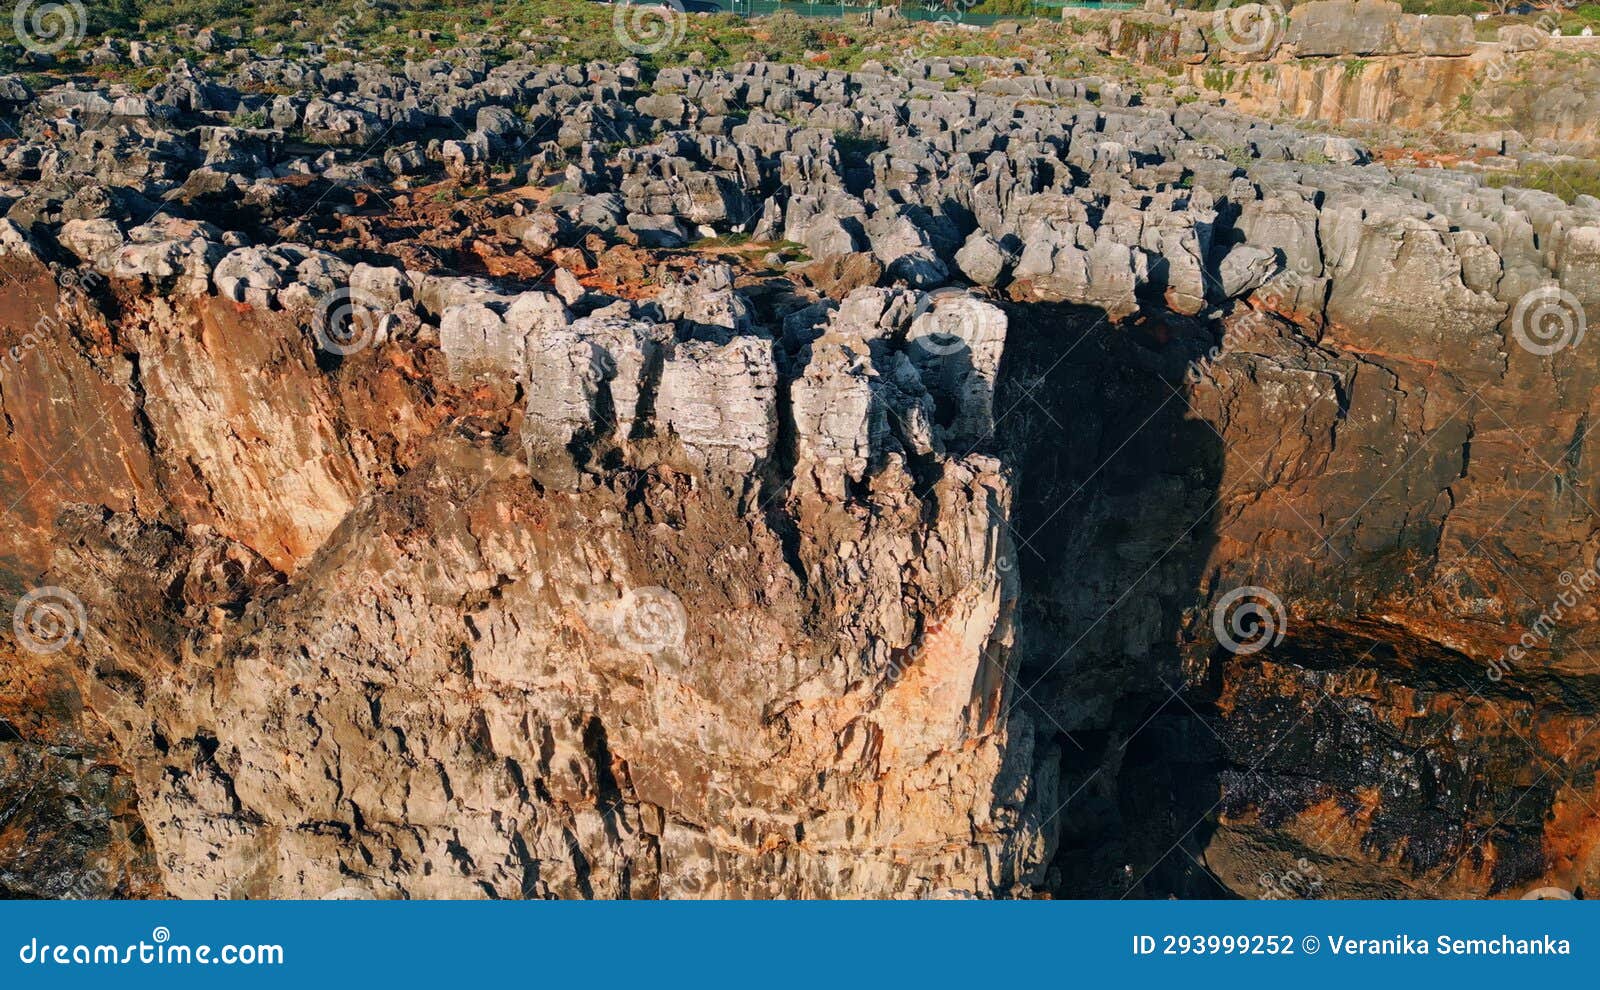 drone rough stony rocks under summer sunlight. dangerous cliff rugger stones.